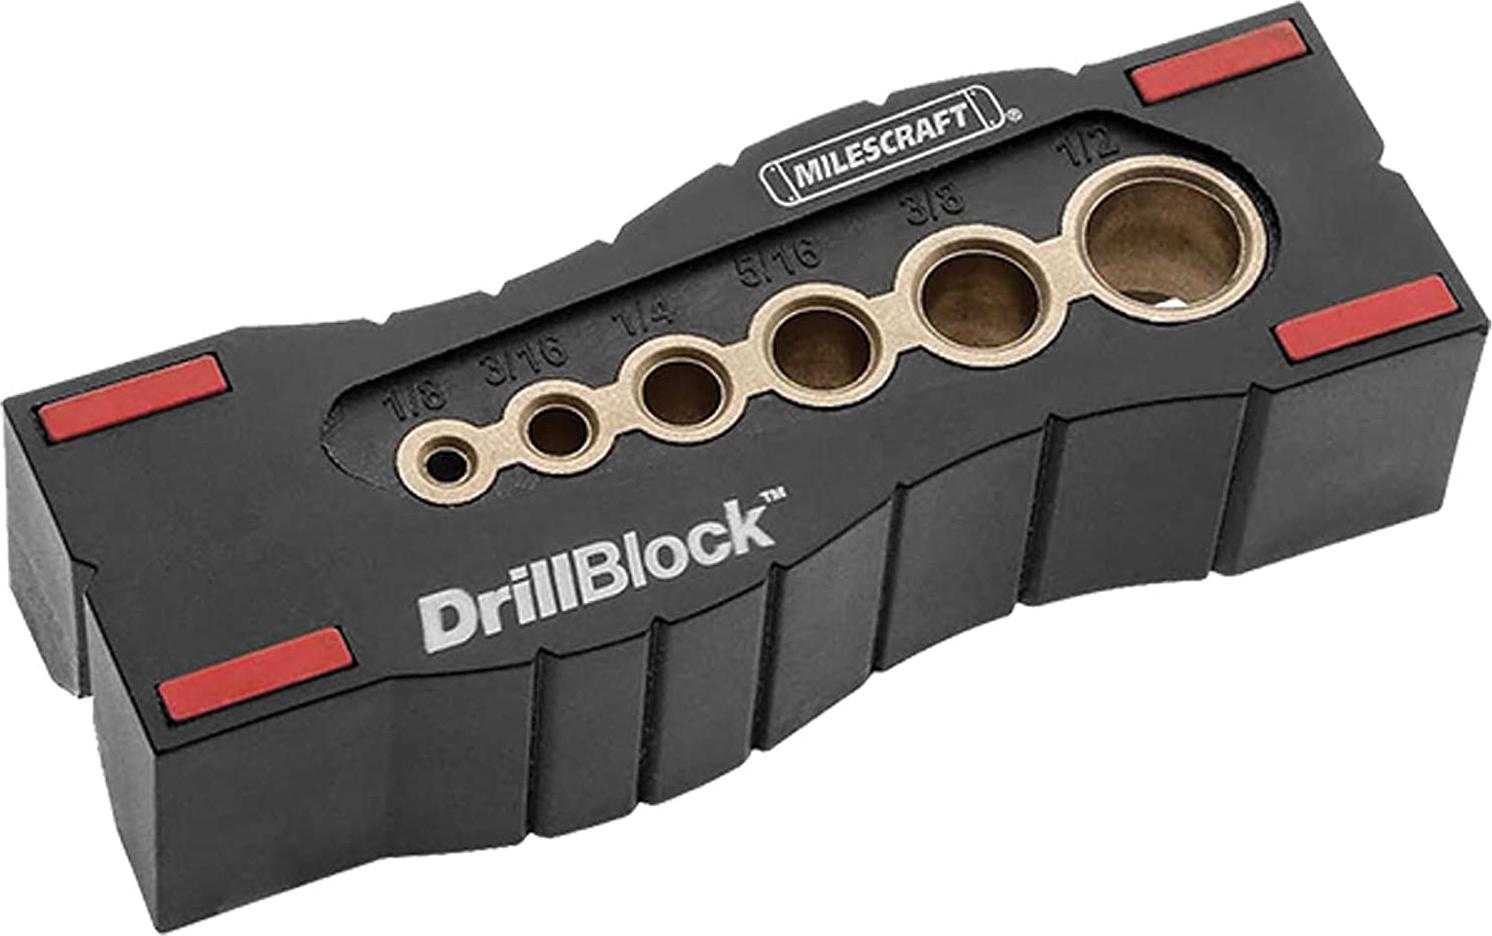 Milescraft, Milescraft DrillBlock Drilling Guide, Pack of 1